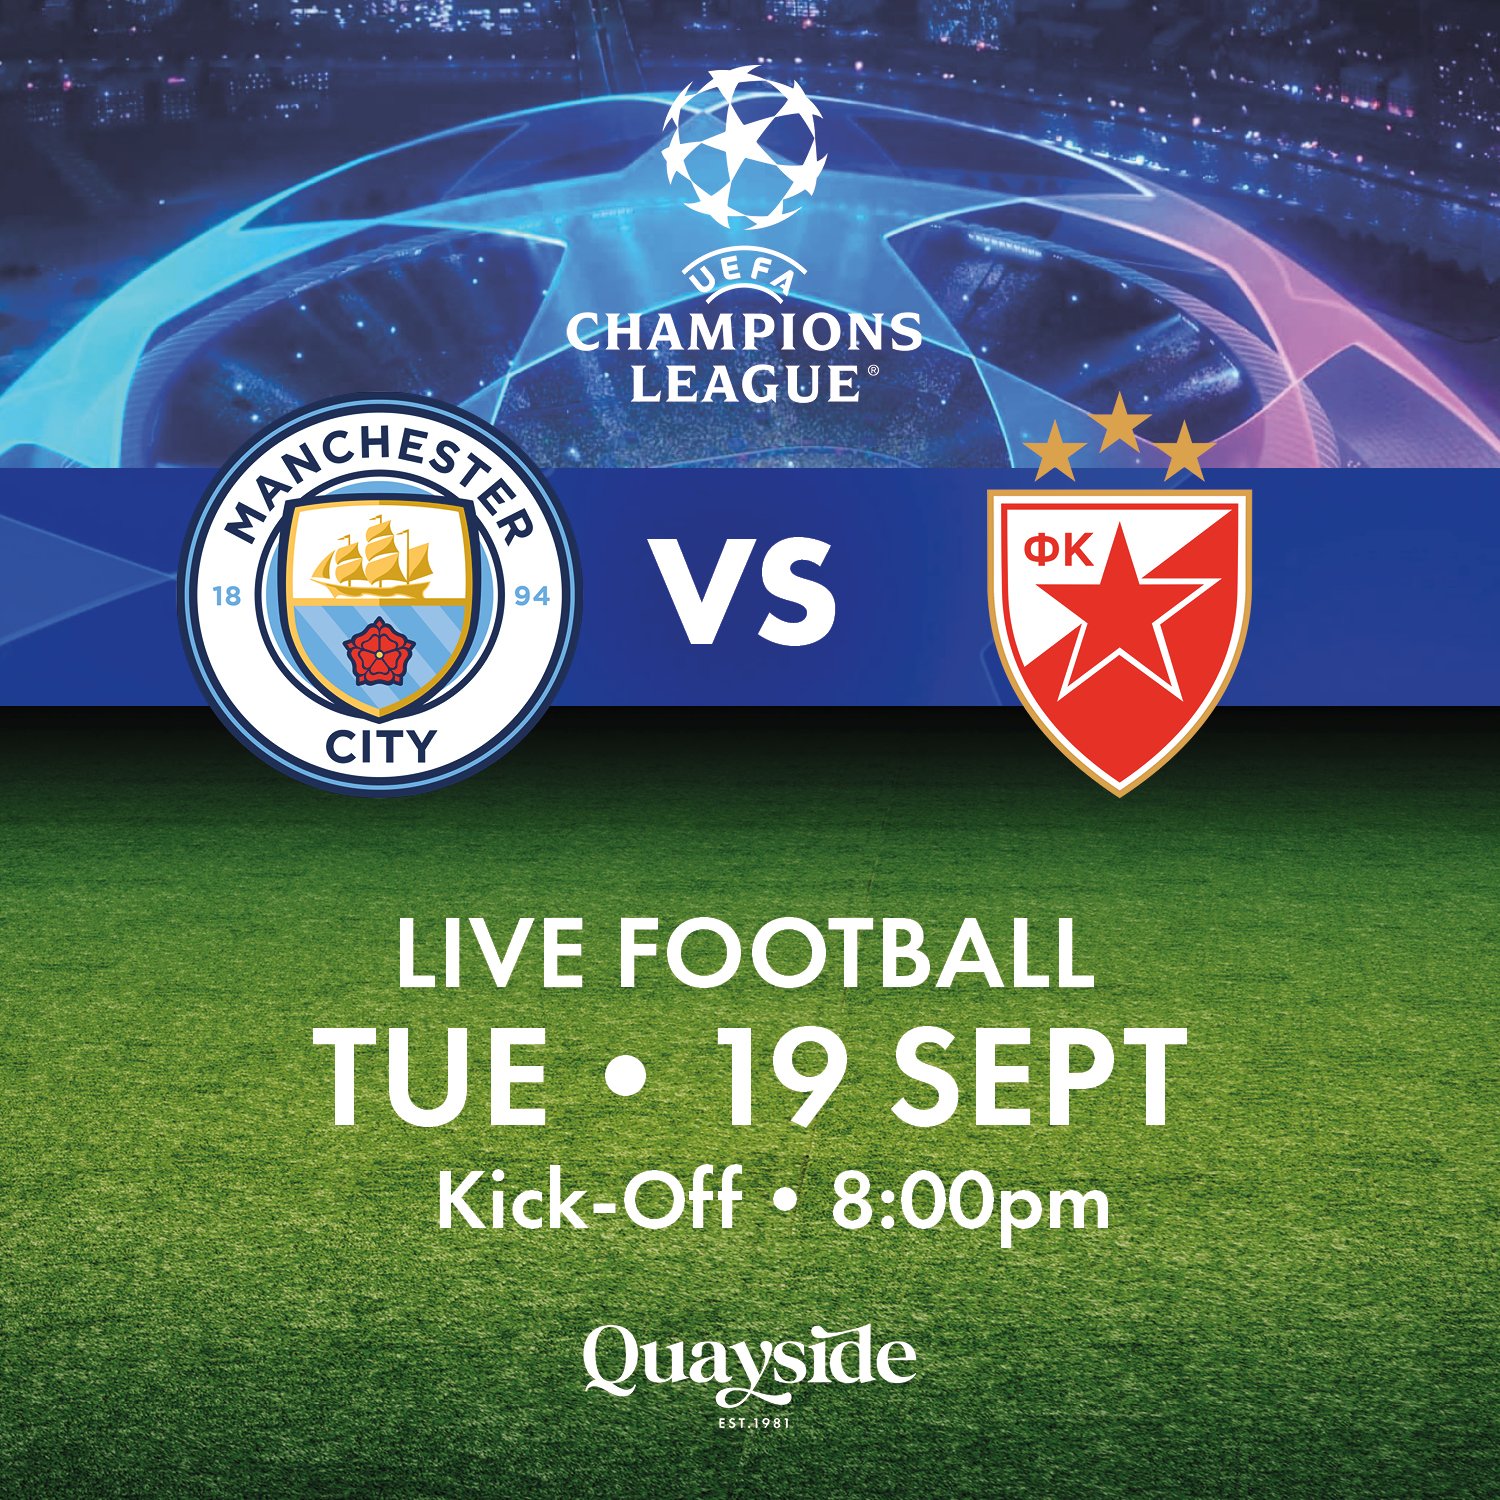 Man City vs Crvena Zvezda LIVE: Champions League kick off 12:30 AM